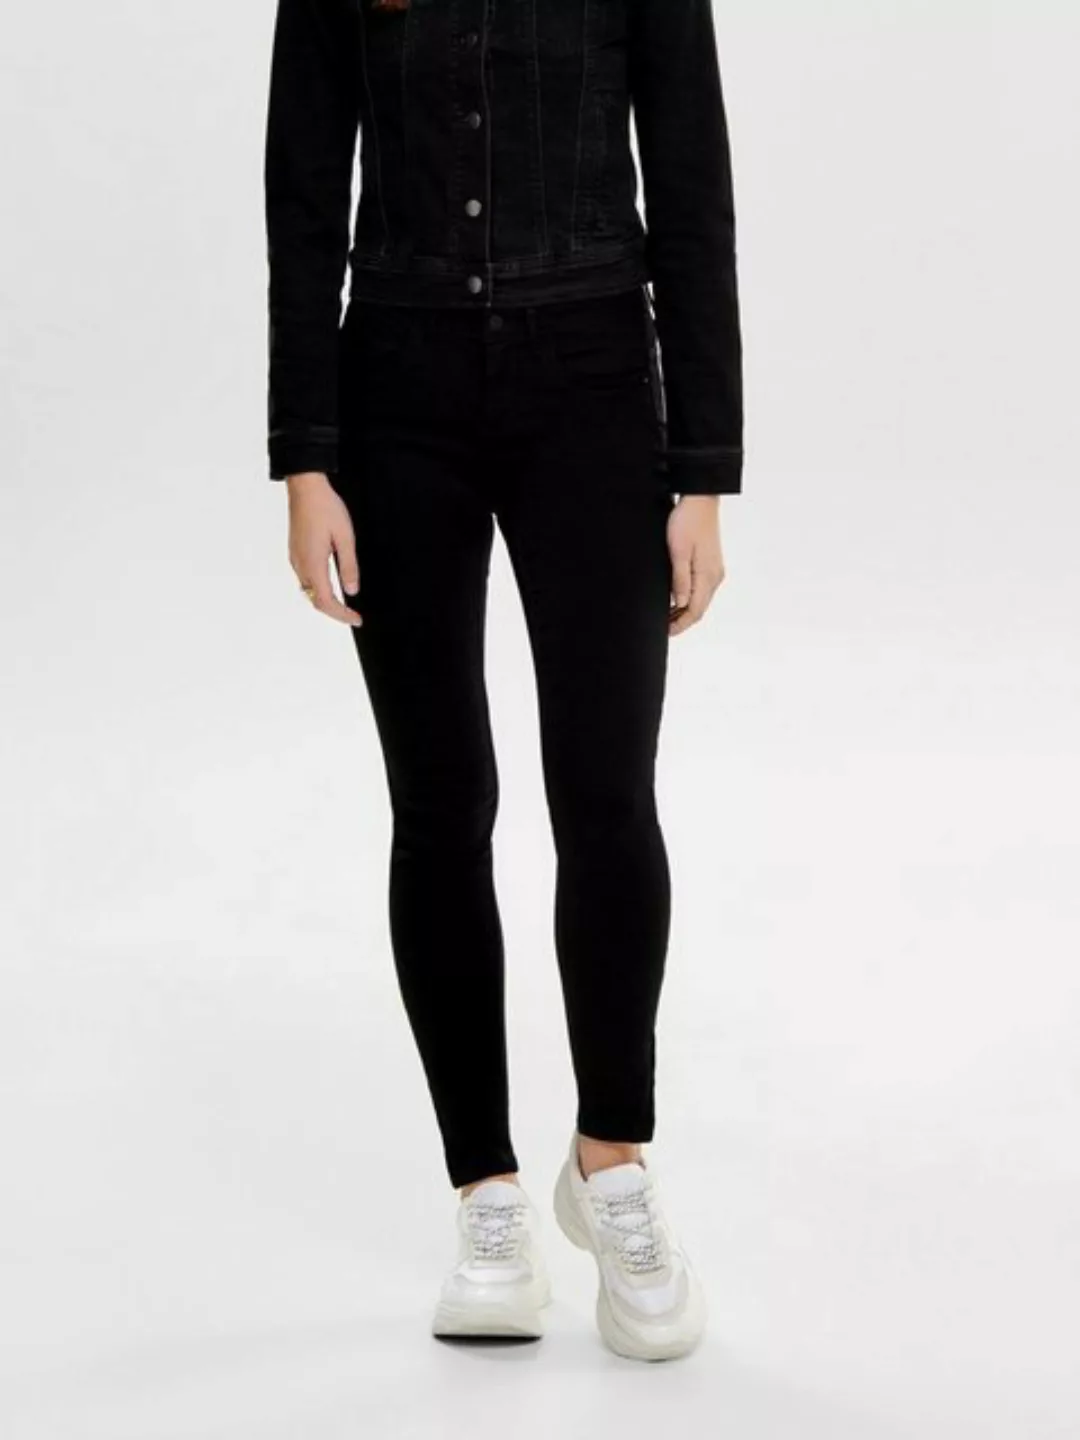 Only Damen Jeans onlKENDELL ETERNAL ANKLE - Skinny Fit - Schwarz - Black günstig online kaufen